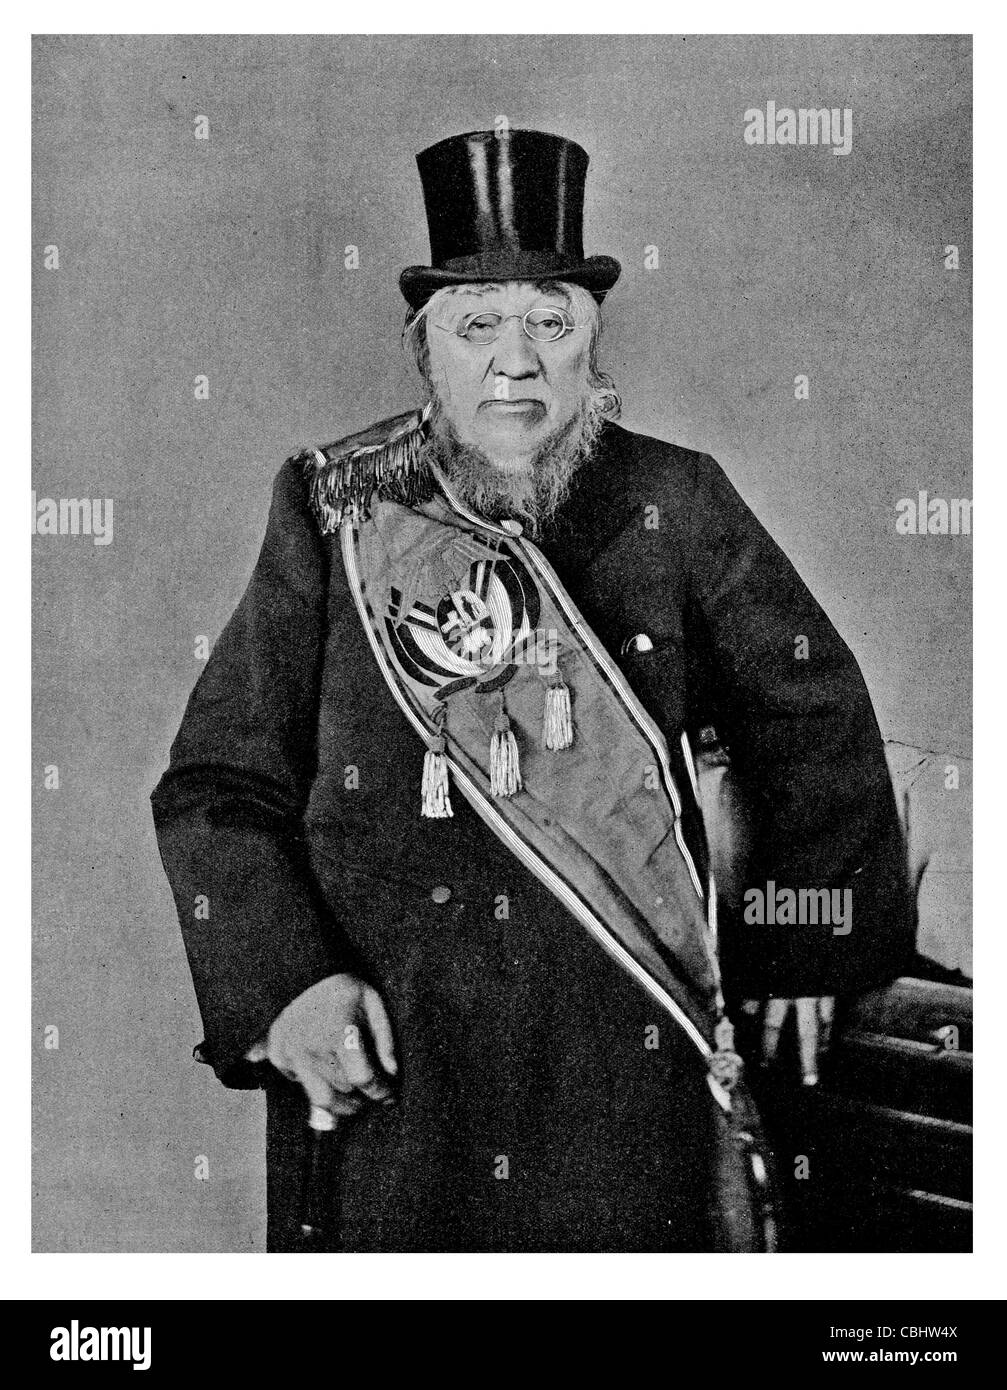 Mr Kruger Top Hat period Costume Hague regalia sash medal beard old walking stick Stock Photo